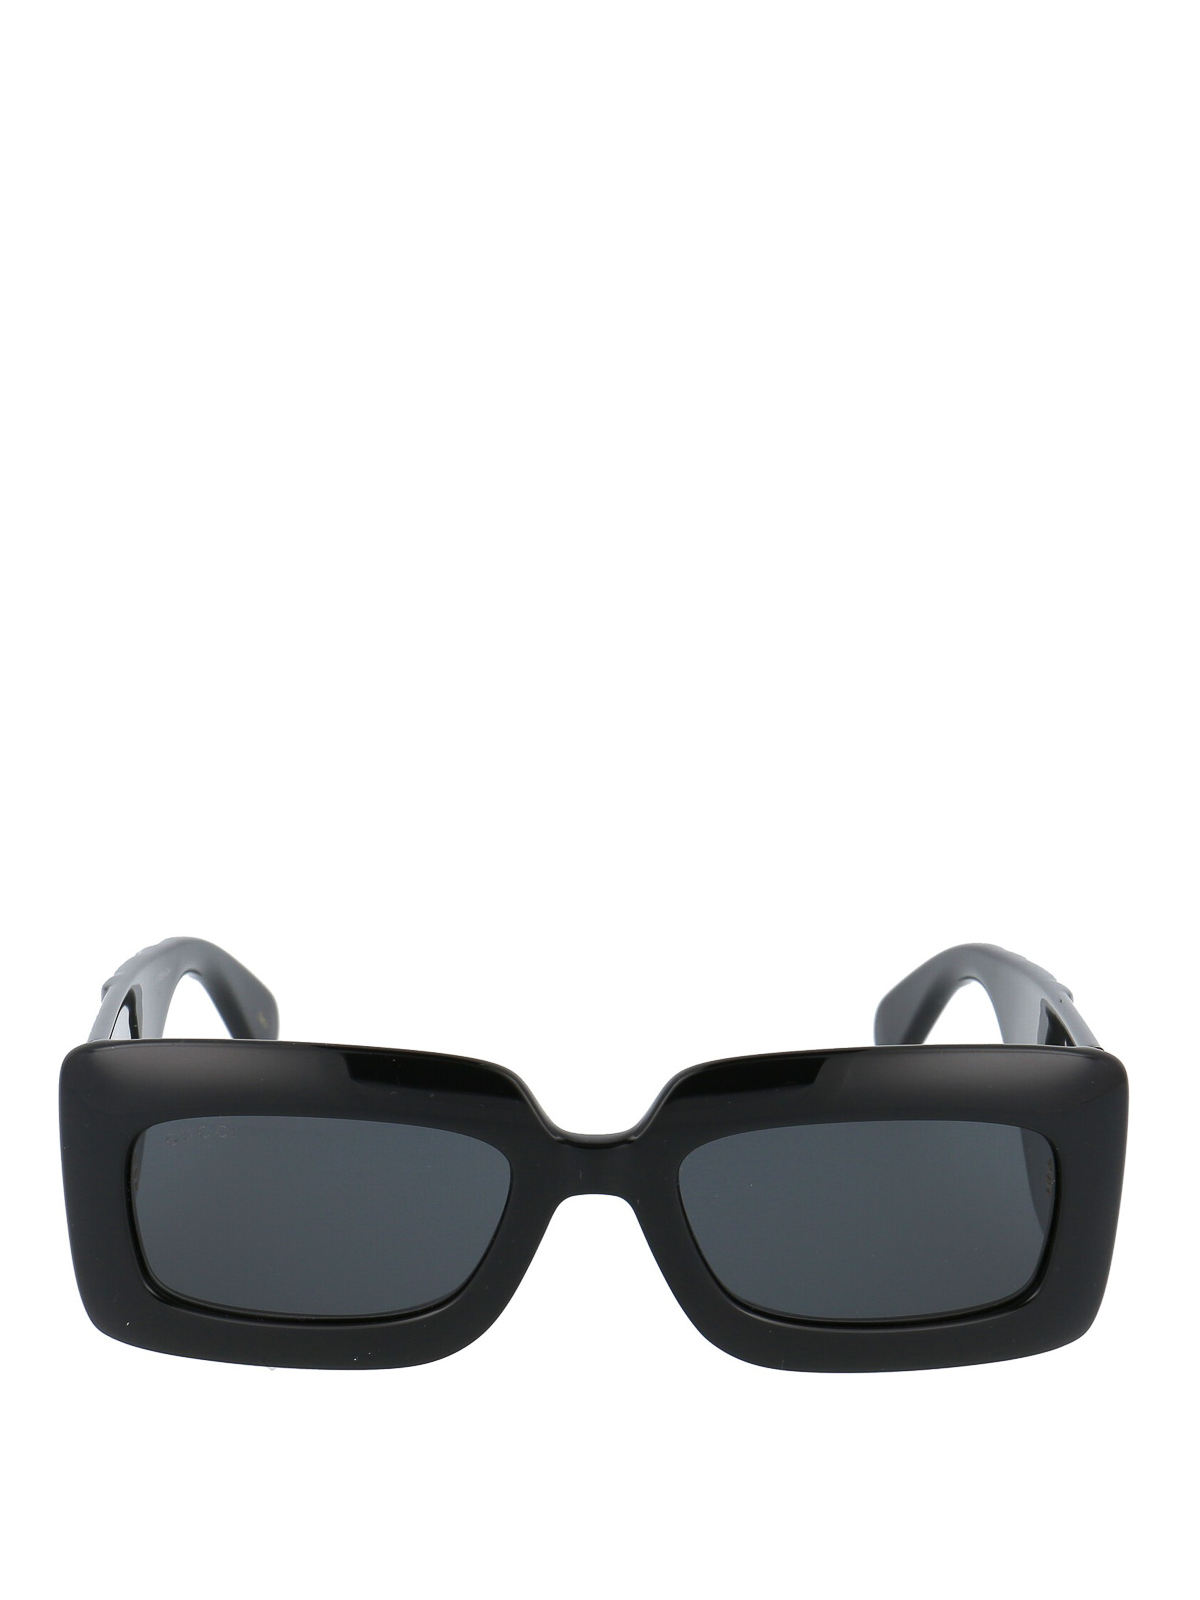 Gucci Square Sunglasses Sunglasses Gg0811s001 Shop Online At Ikrix